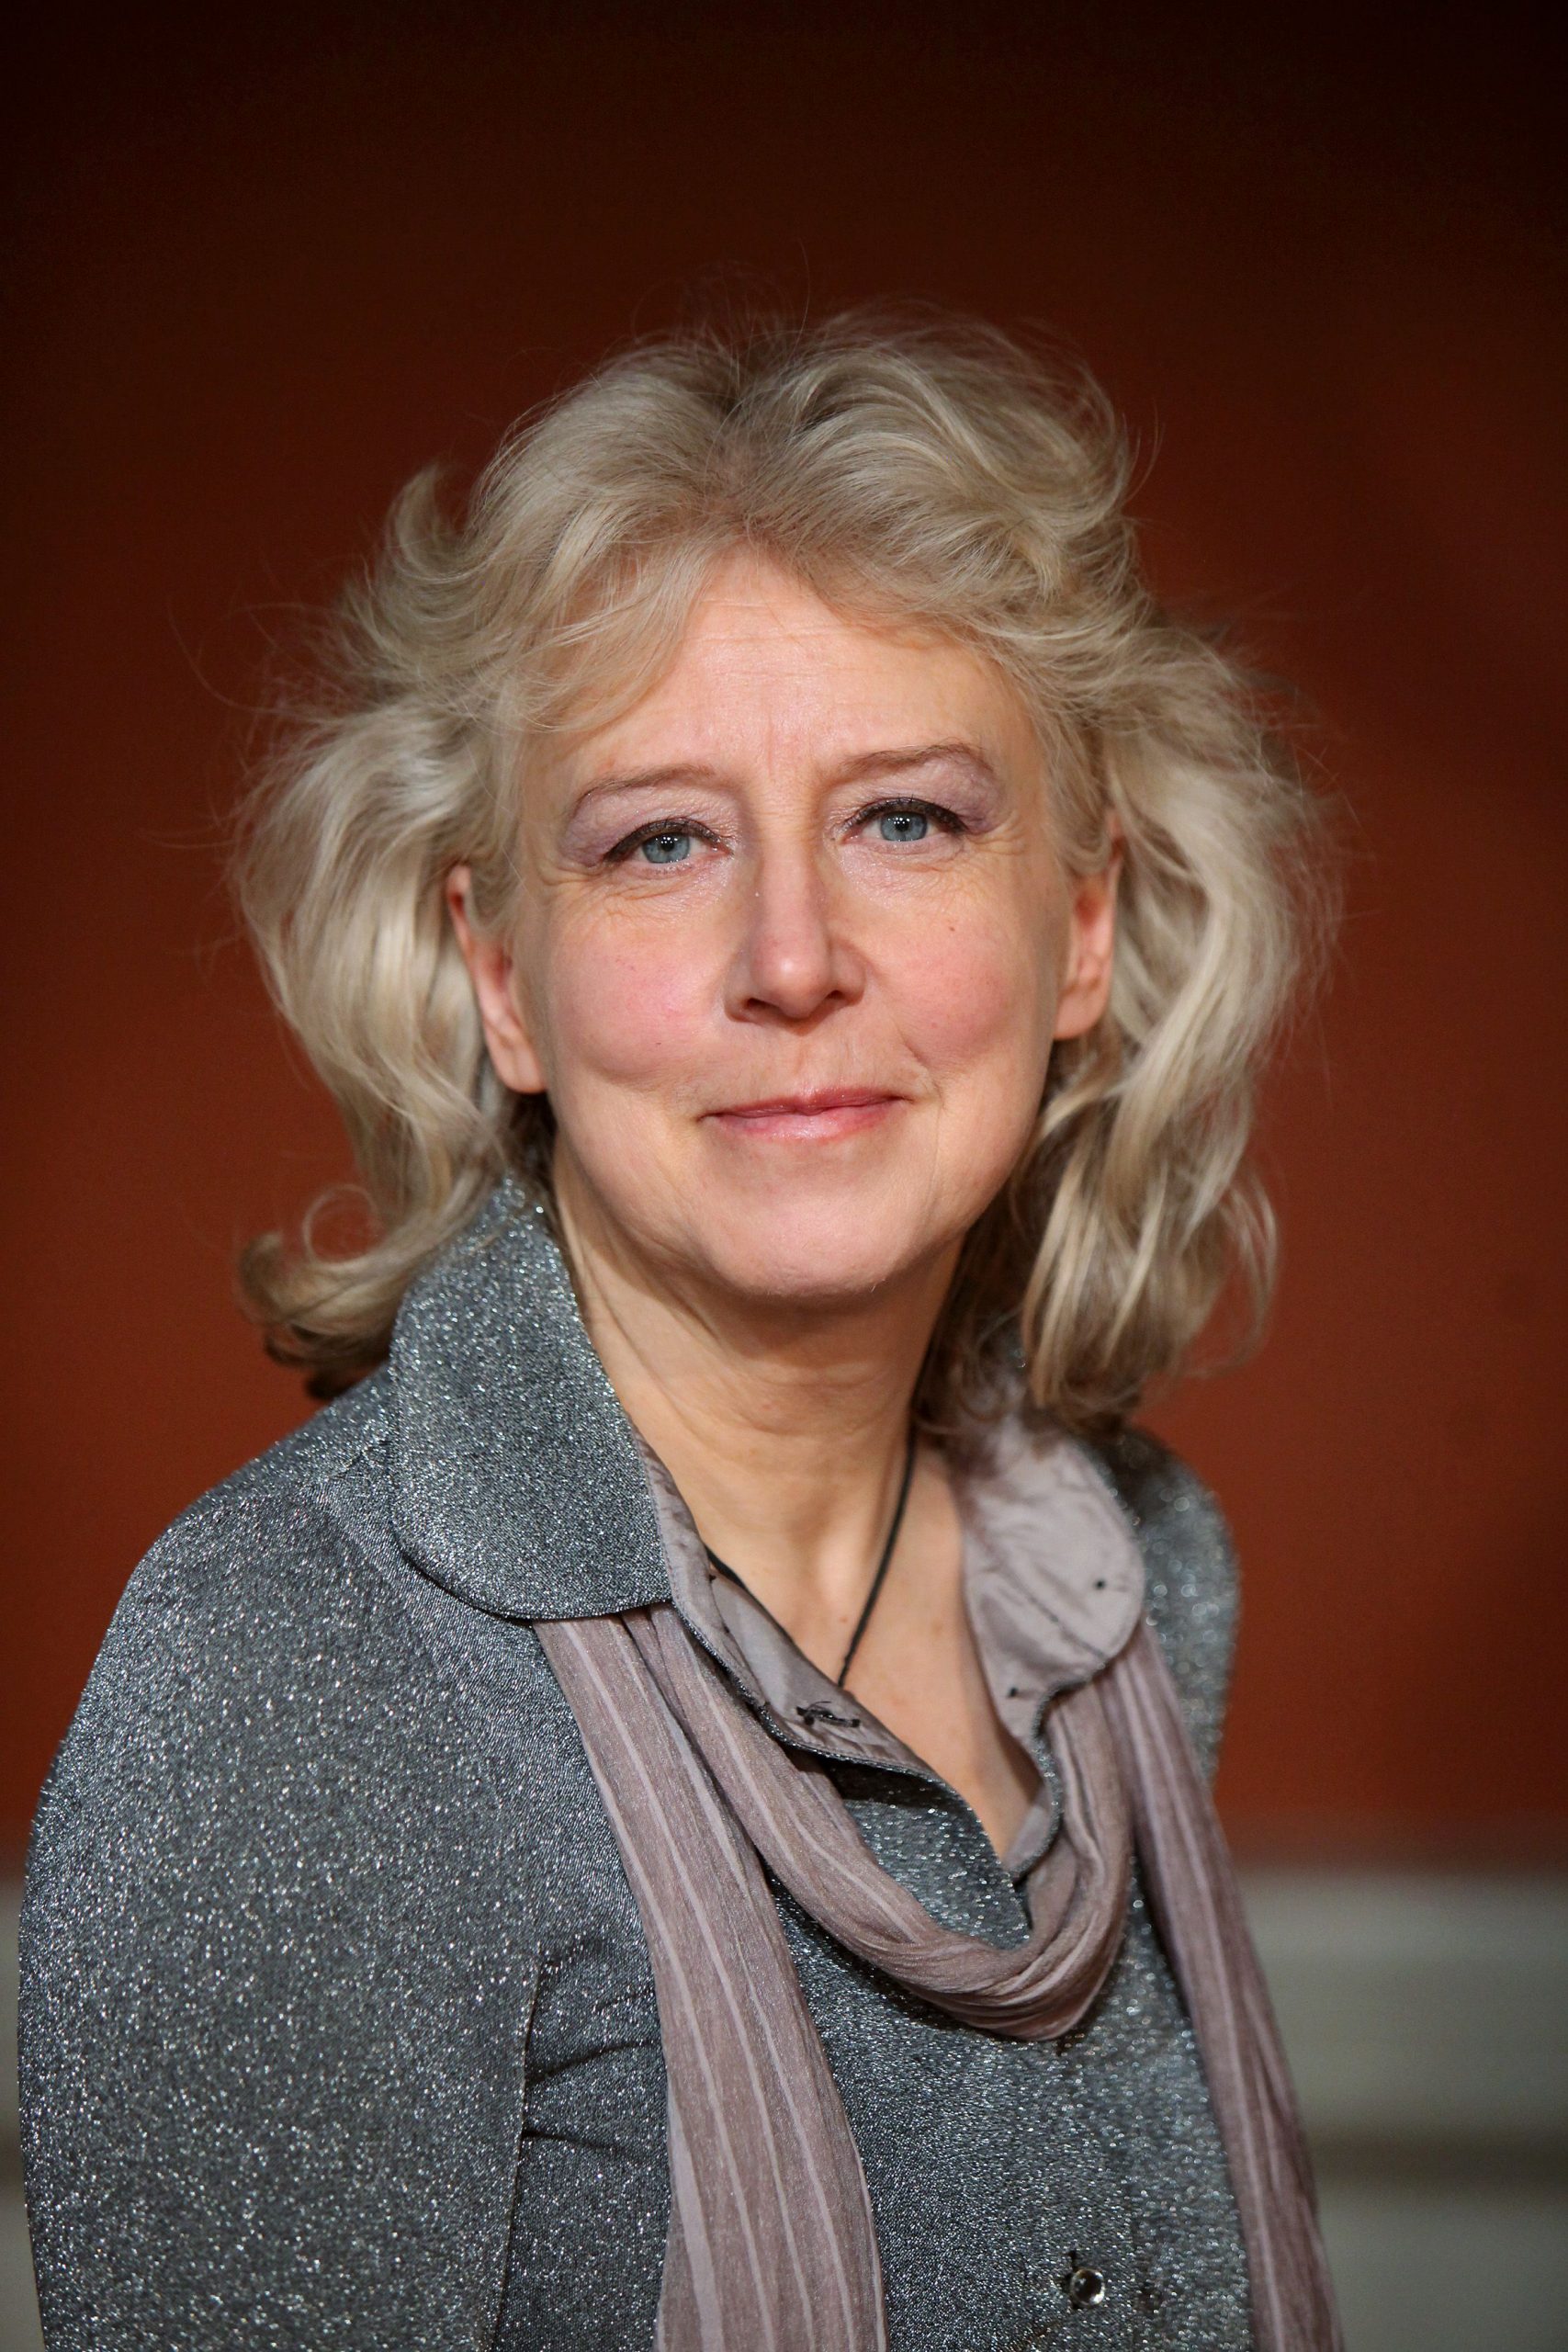 Carita Holmström